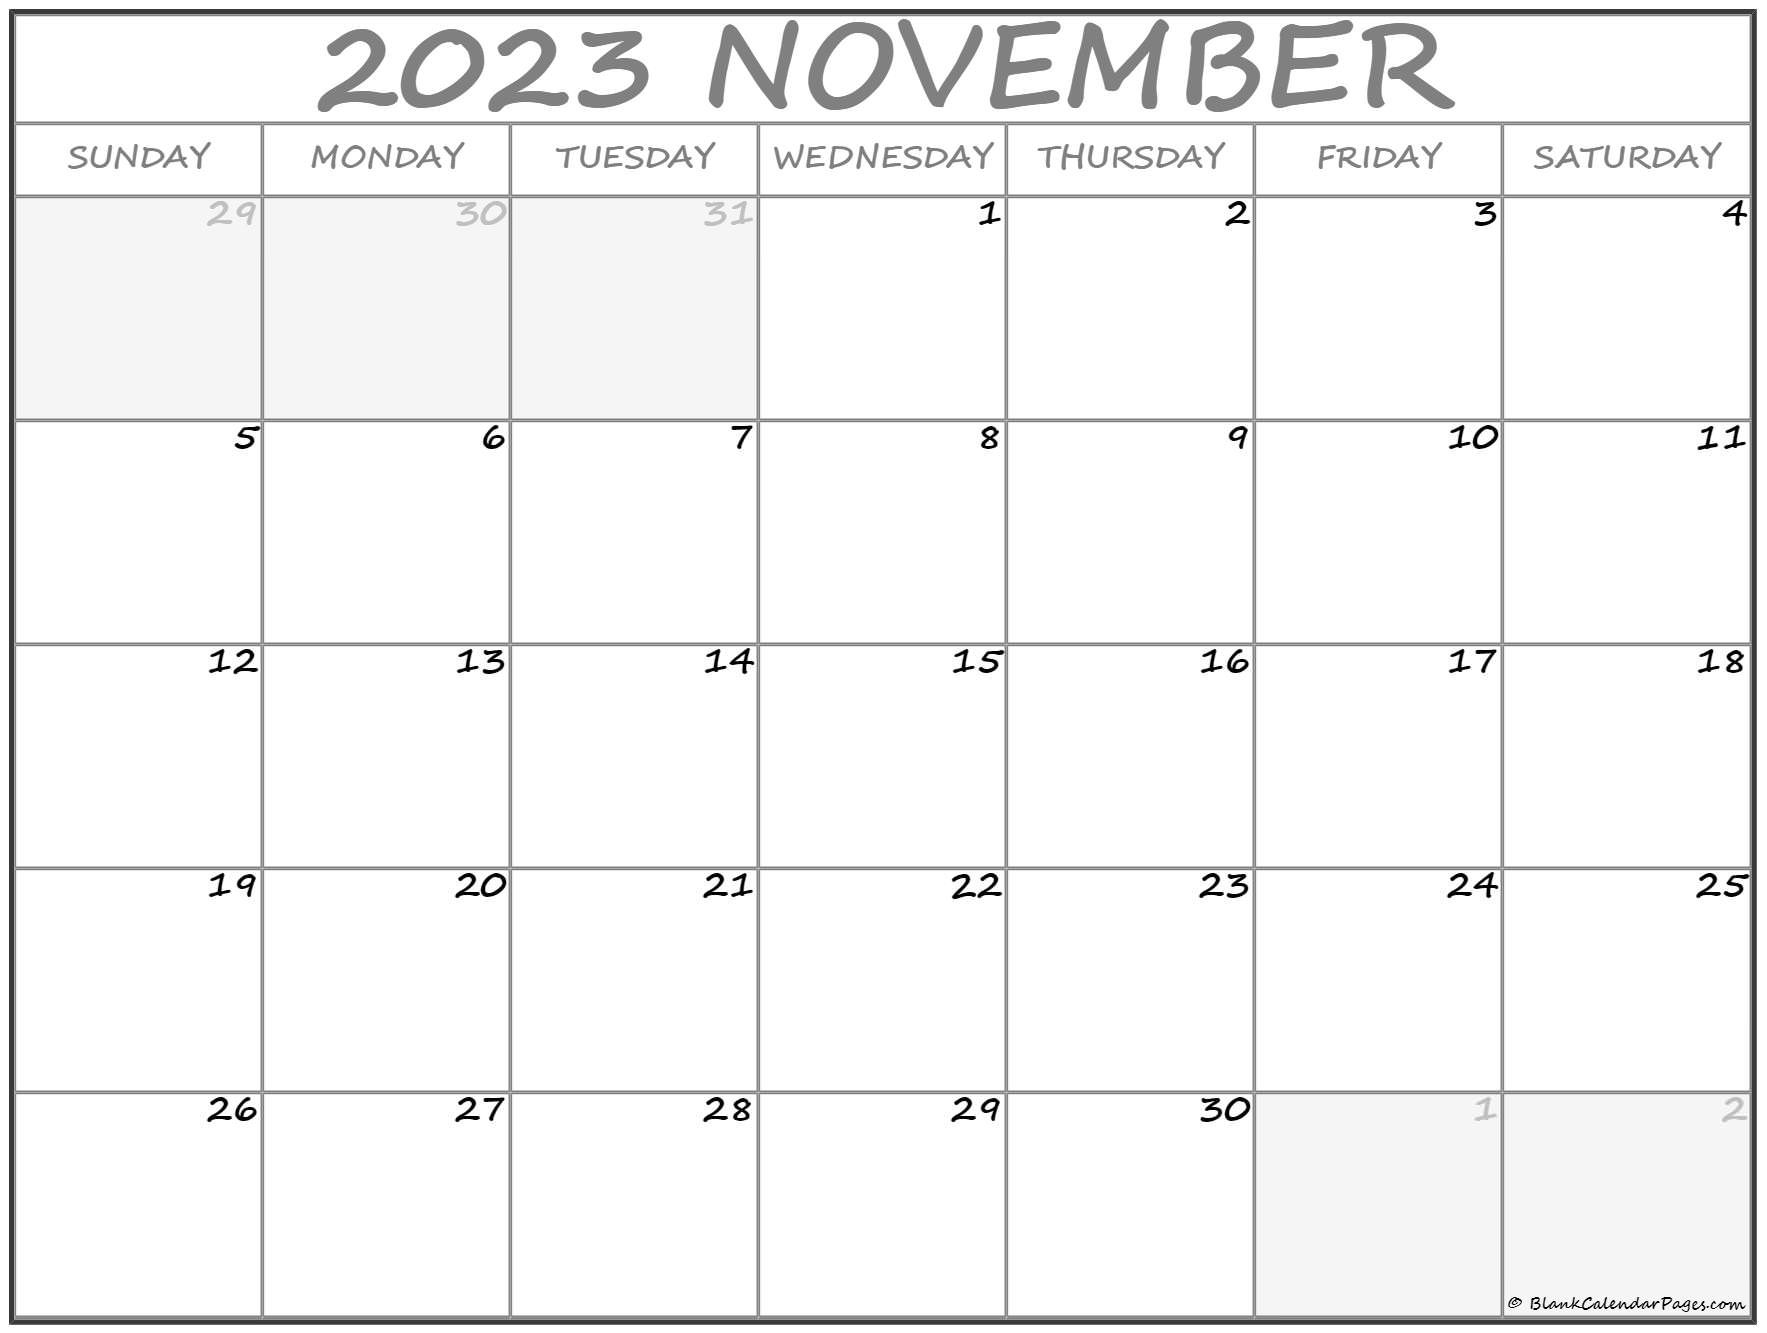 november 2023 calendar free printable calendar - november 2023 calendar ...